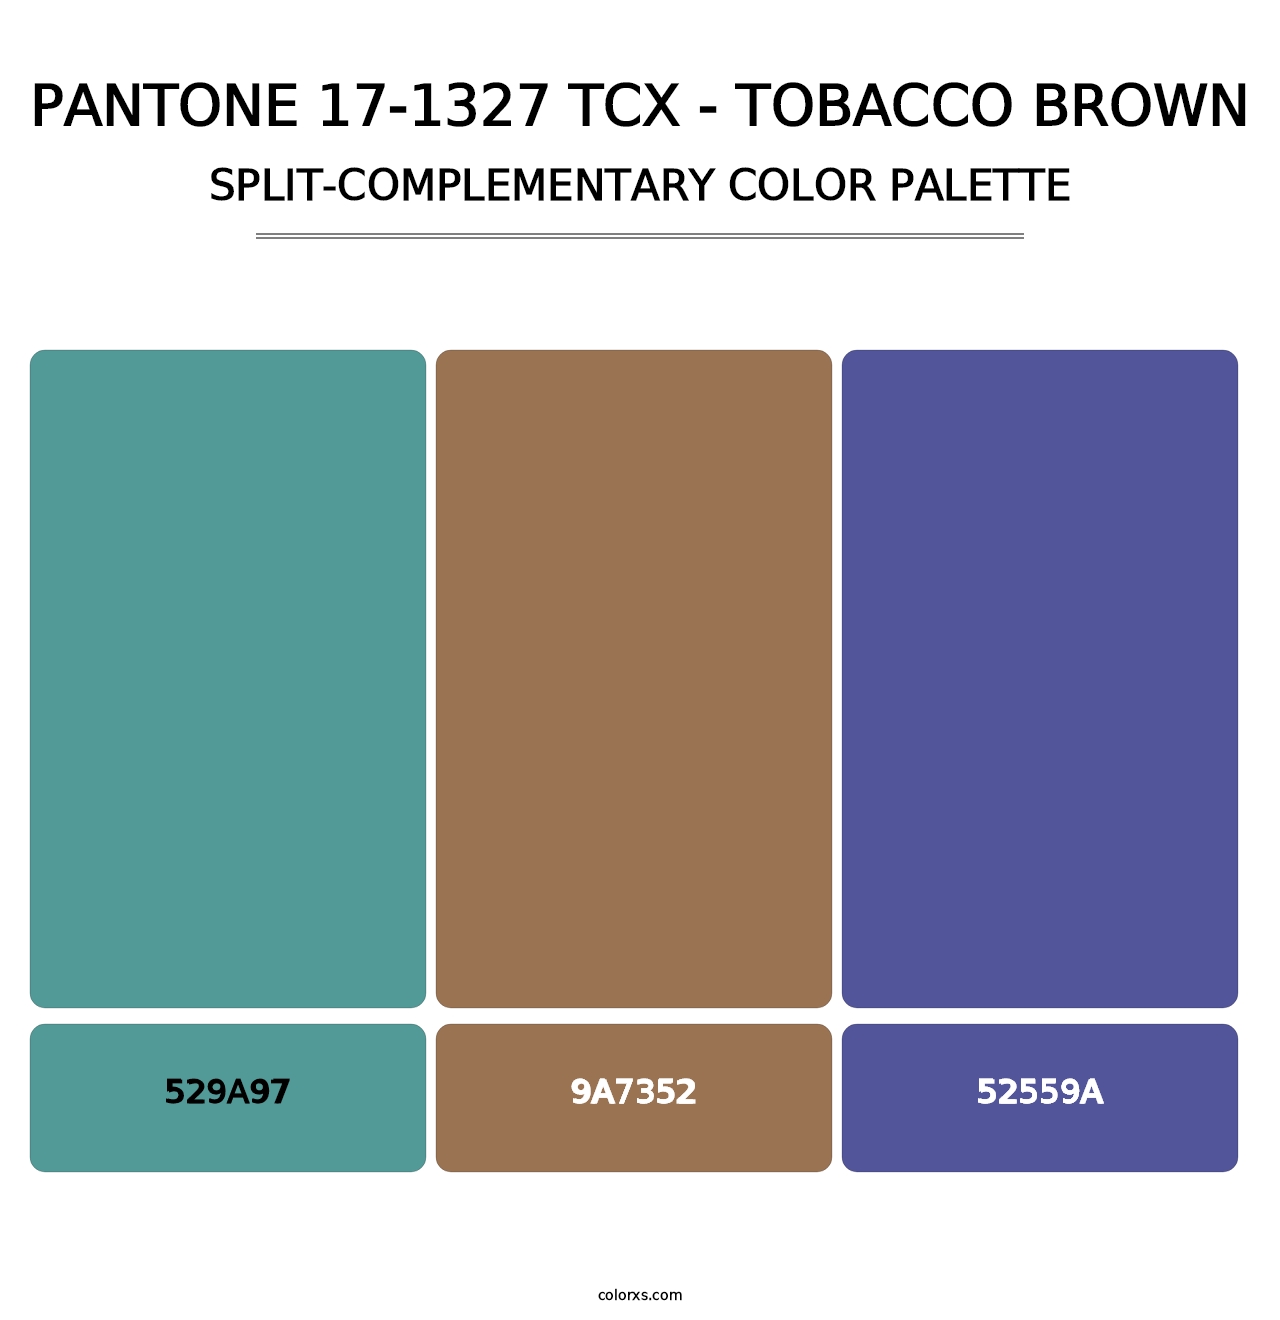 PANTONE 17-1327 TCX - Tobacco Brown - Split-Complementary Color Palette